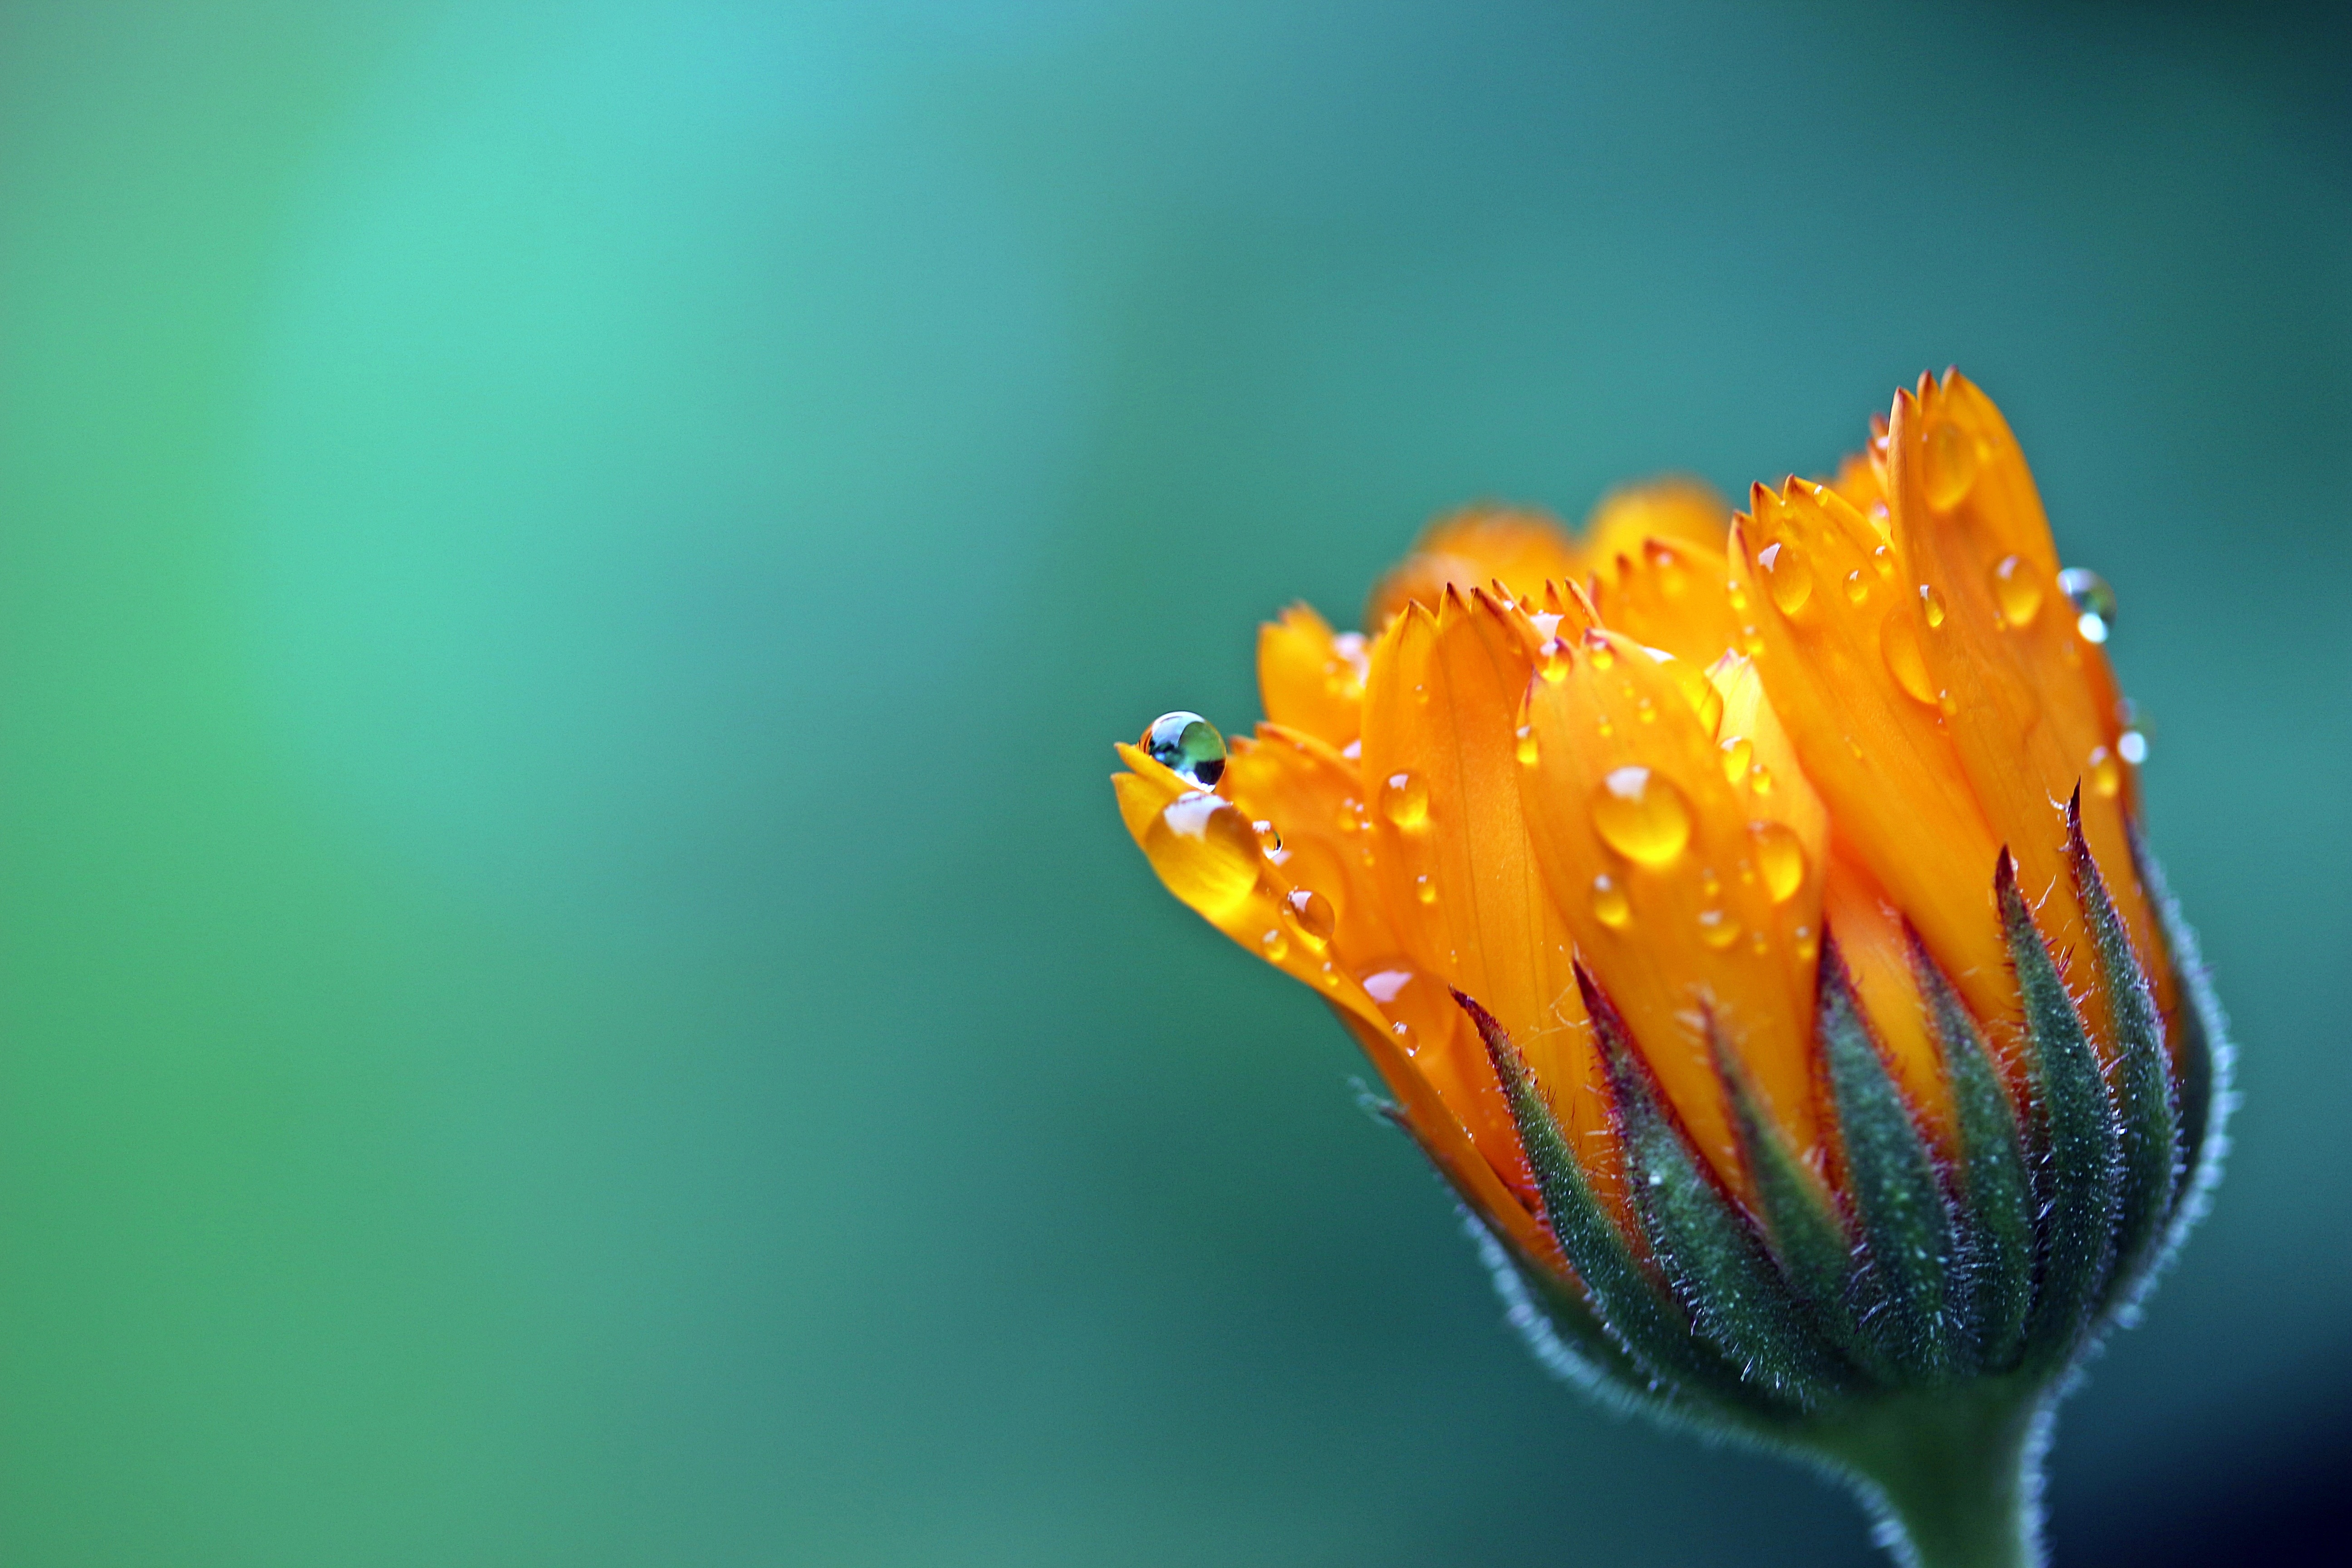 blossom-dew-plant-photography-leaf-flower-petal-bloom-raindrop-wet-orange-pollen-green-yellow-close-flora-drip-close-up-gardening-moisture-marigold-composites-medicinal-plant-macro-photography-floweri